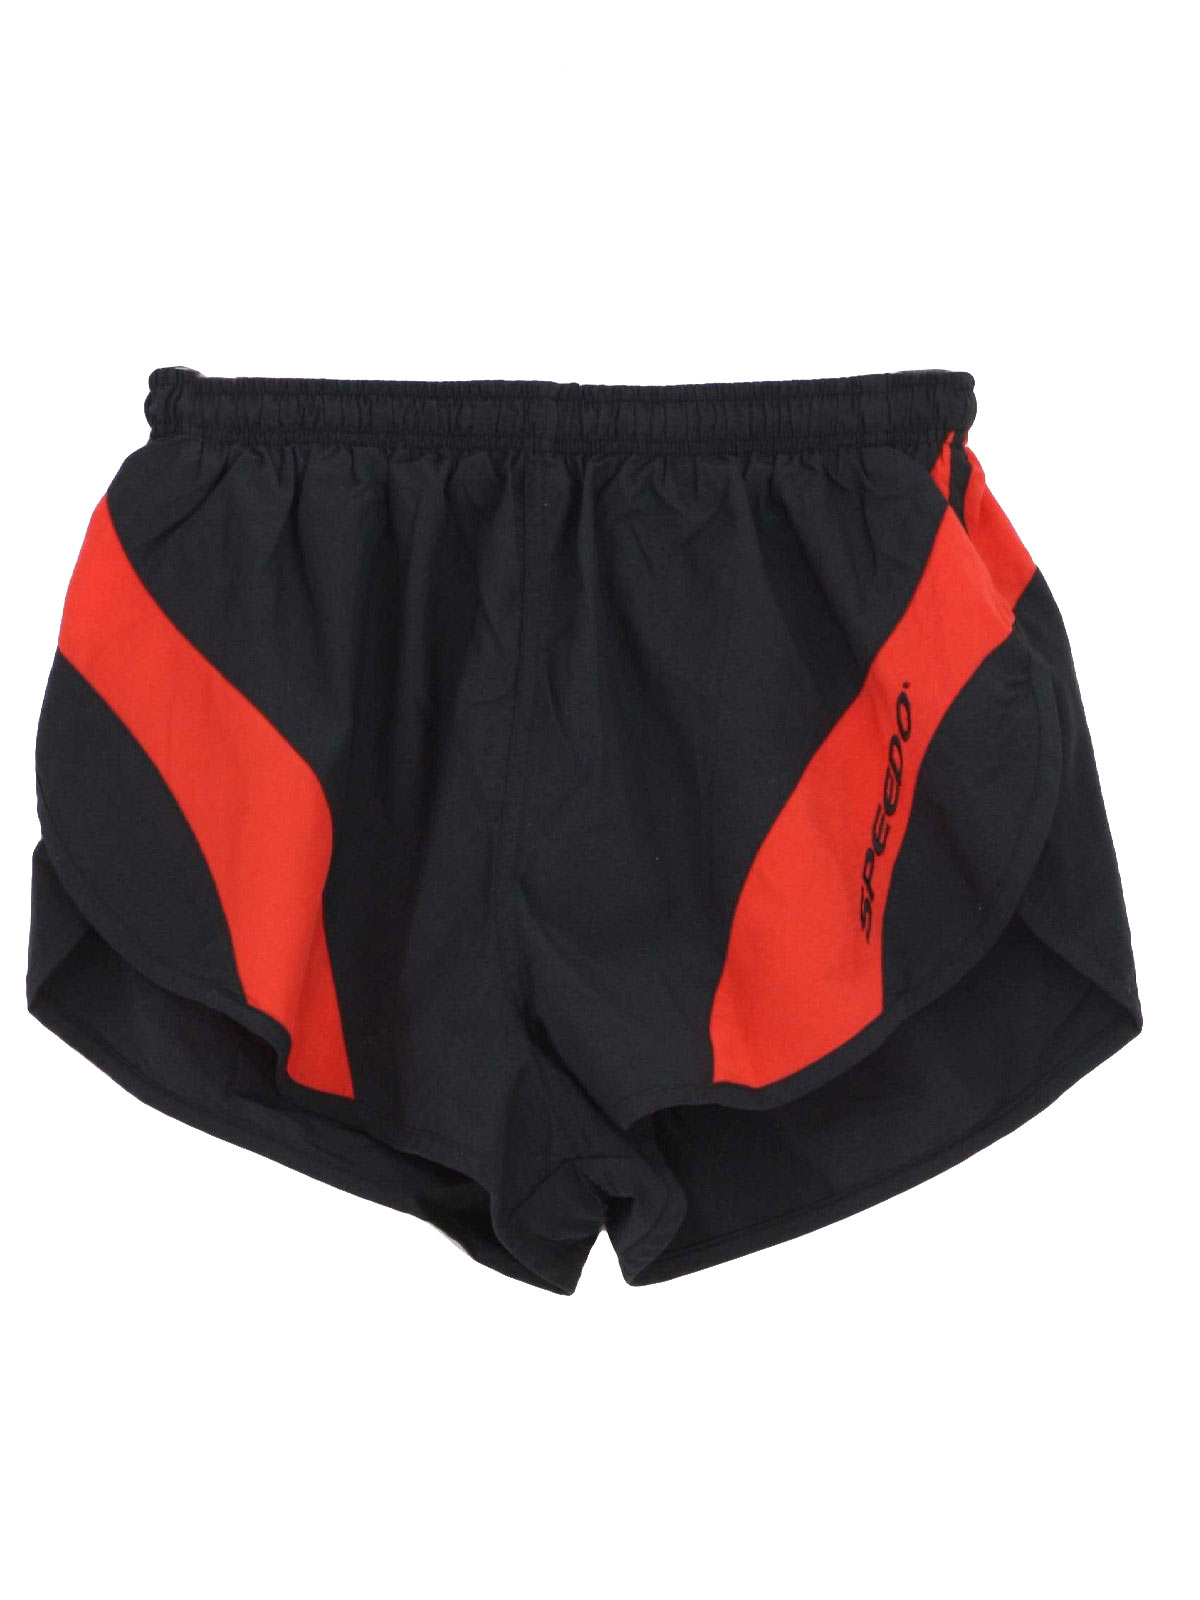 Speedo 80's Vintage Shorts: 80s -Speedo- Mens red and black polyester ...